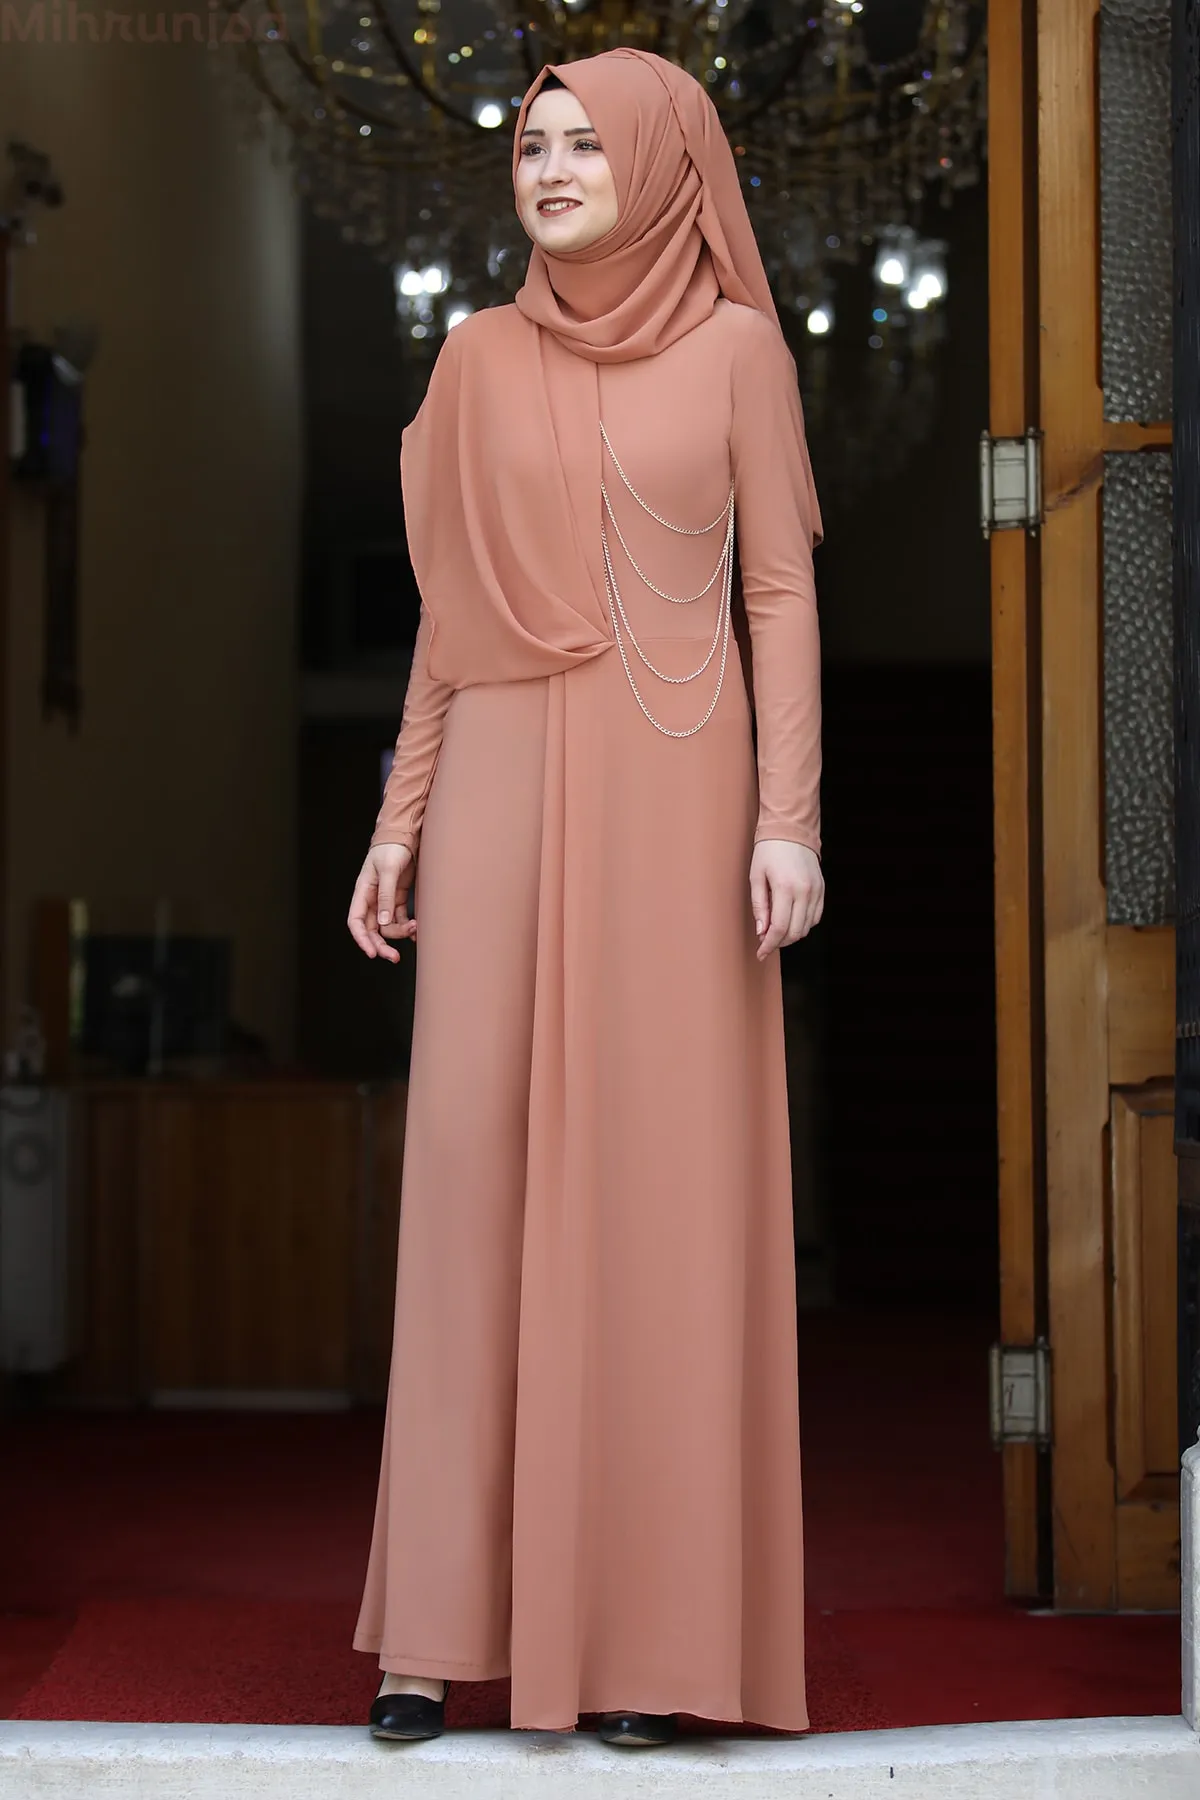 Modern Islamic Clothing, Hijabs